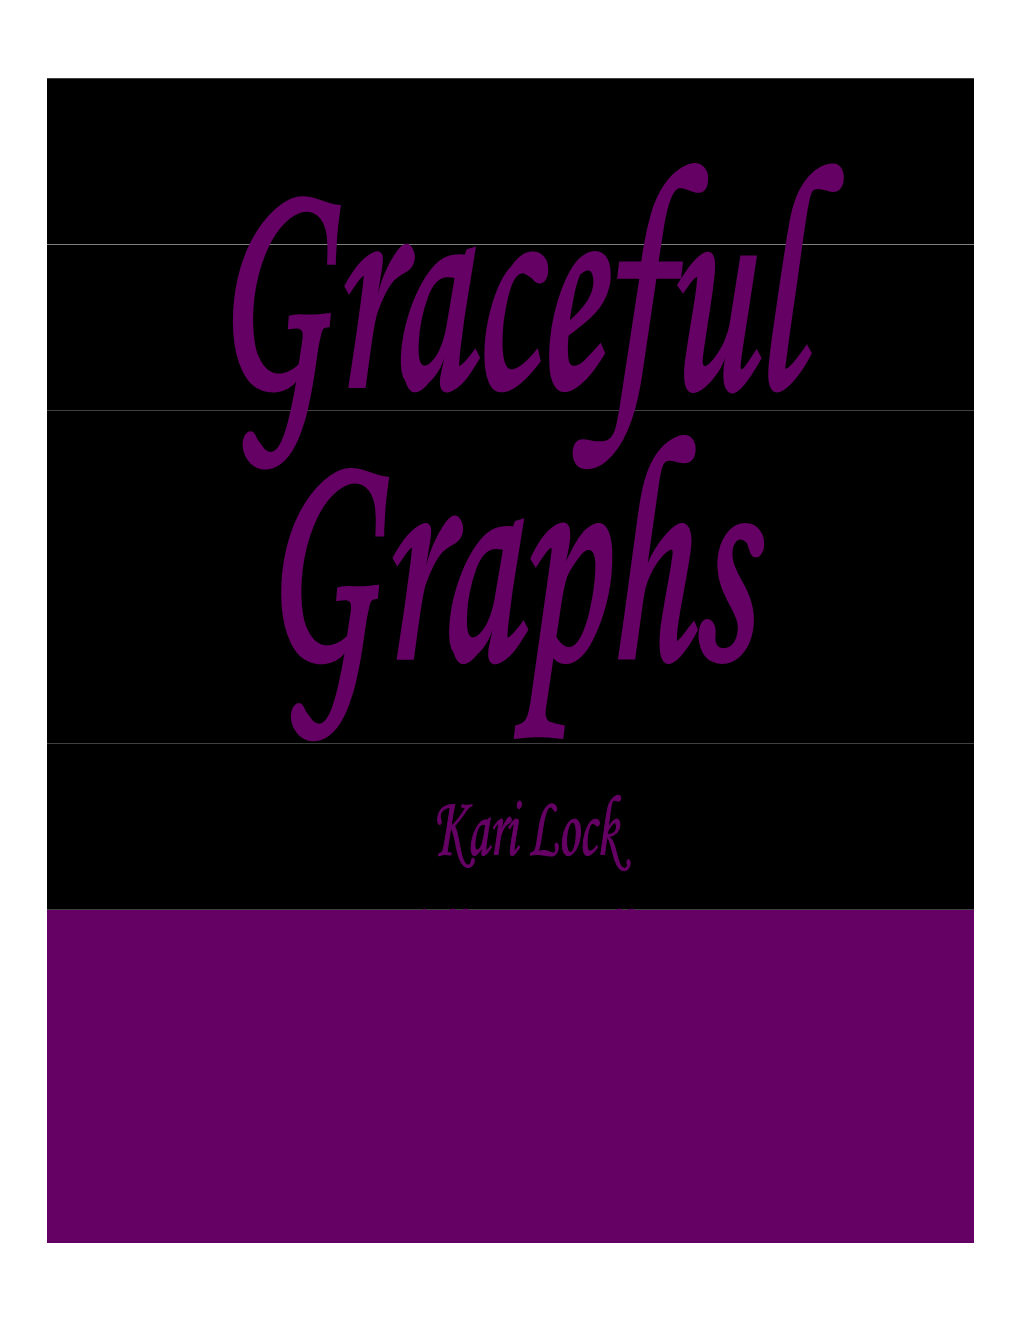 Graceful Graphs